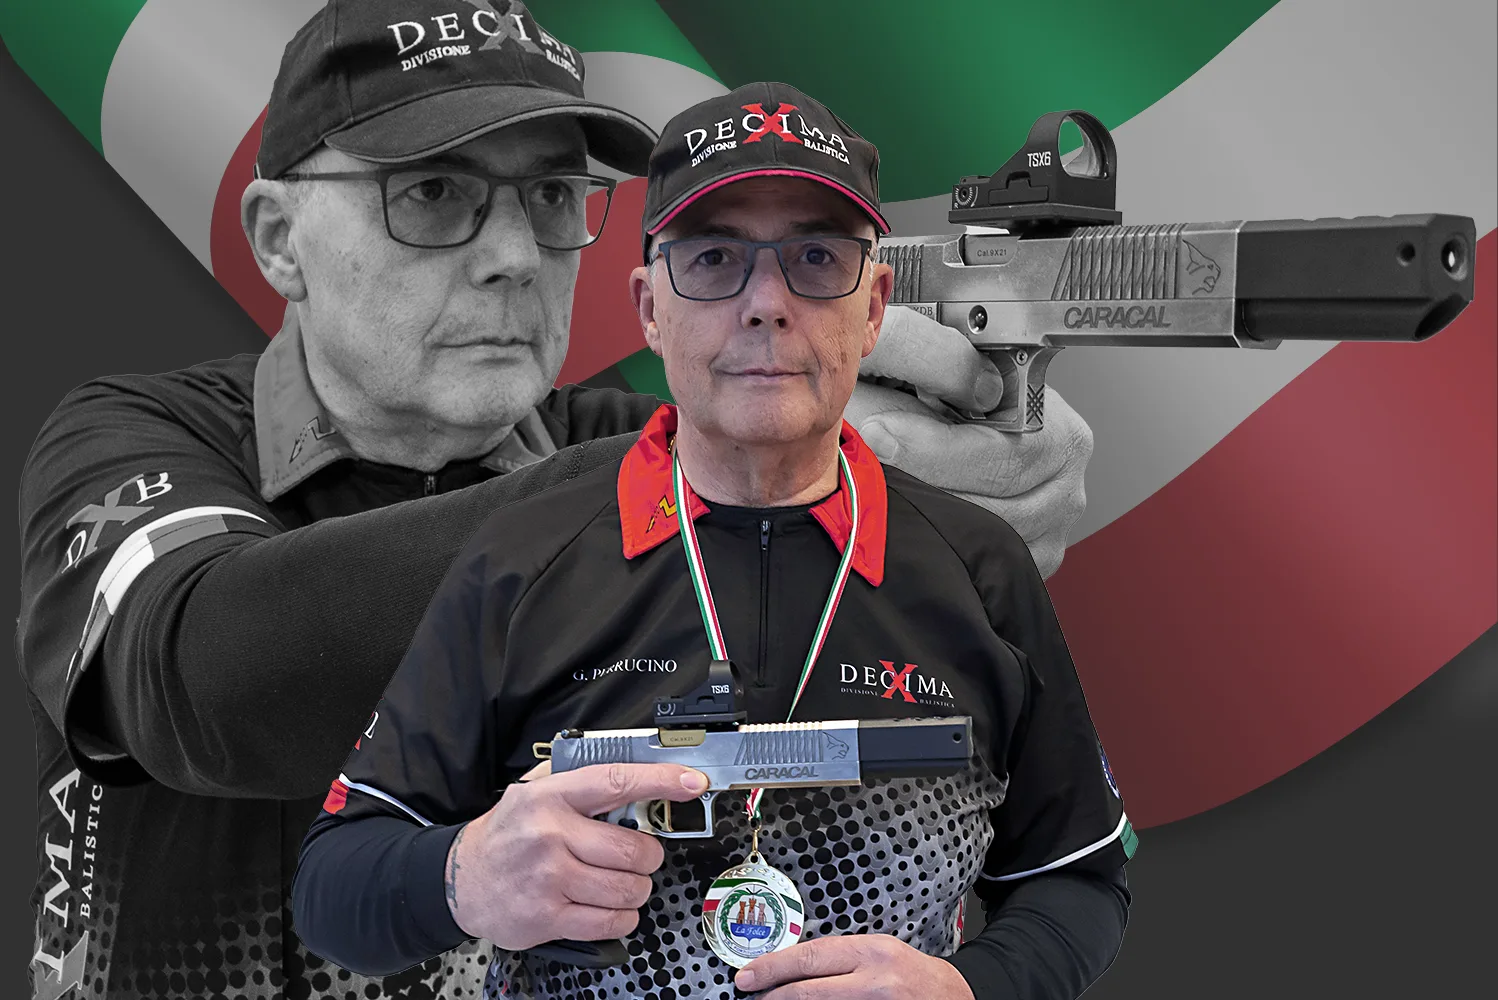 Giuseppe-Perrucino-decimadb-ipsc-shooting-team-IPSC-meet-the-team-1